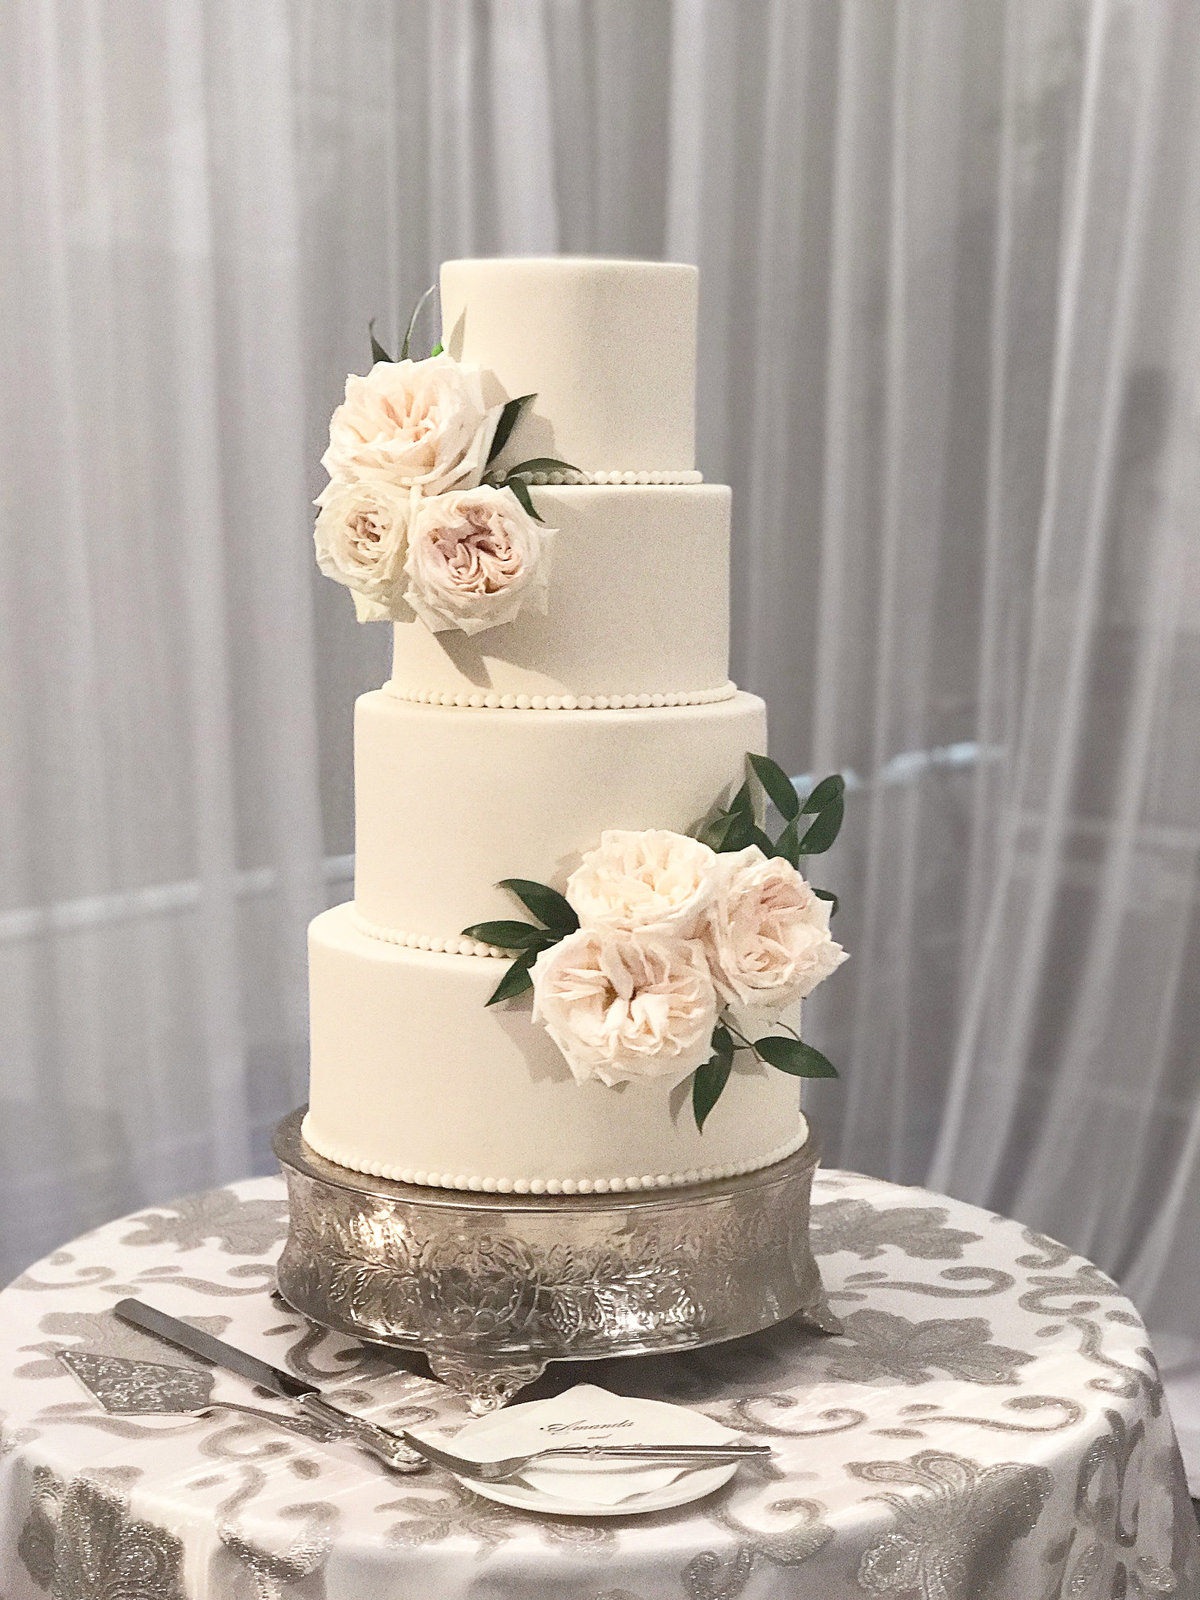 Whippt Desserts - Wedding Cake 